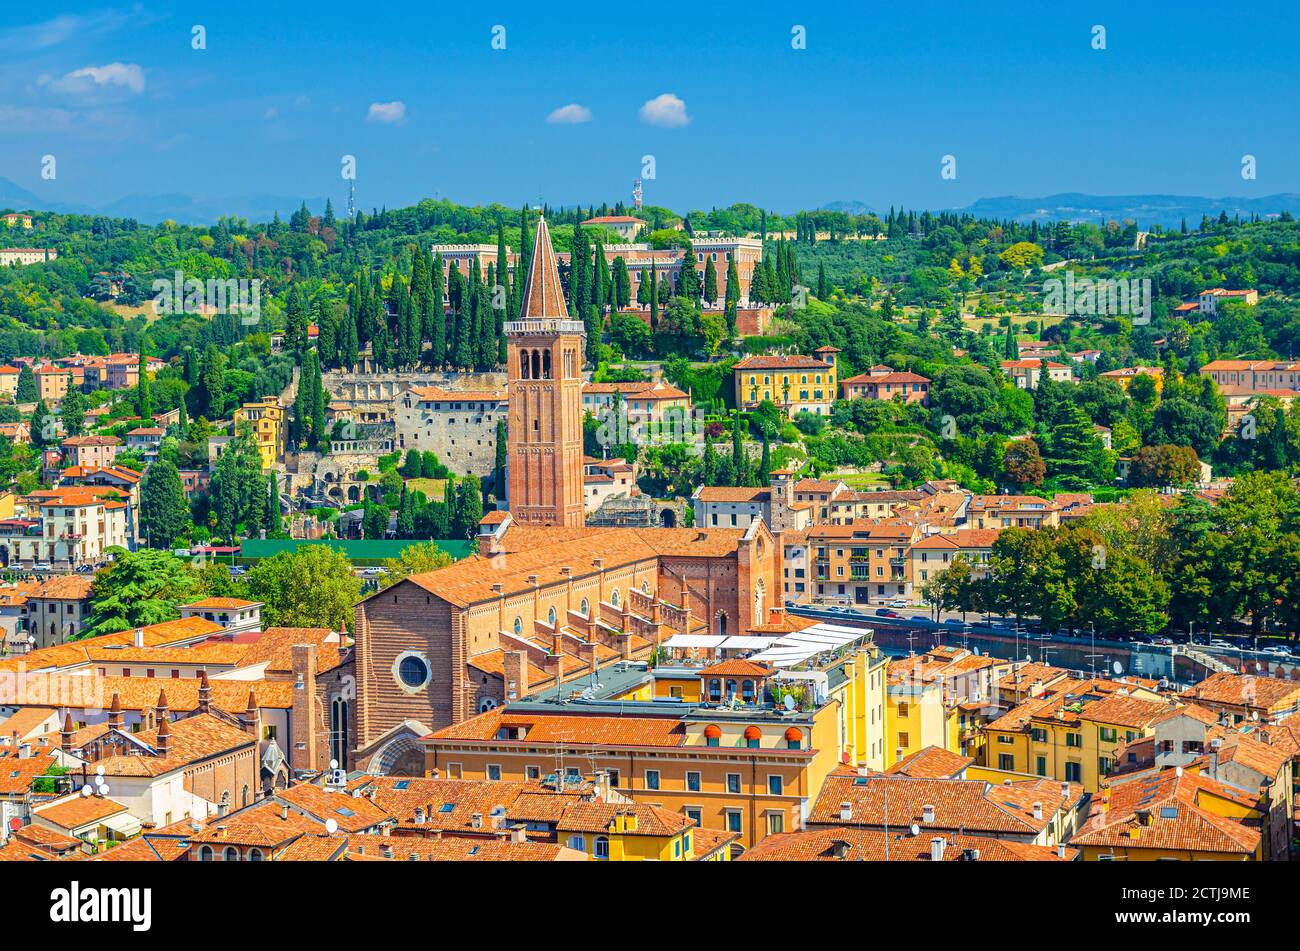 Aerial view of Basilica di Santa Anastasia catholic church in Verona city historical centre Citta Antica. Cityscape of Verona town. Blue sky, suburban hills background. Veneto Region, Northern Italy Stock Photo